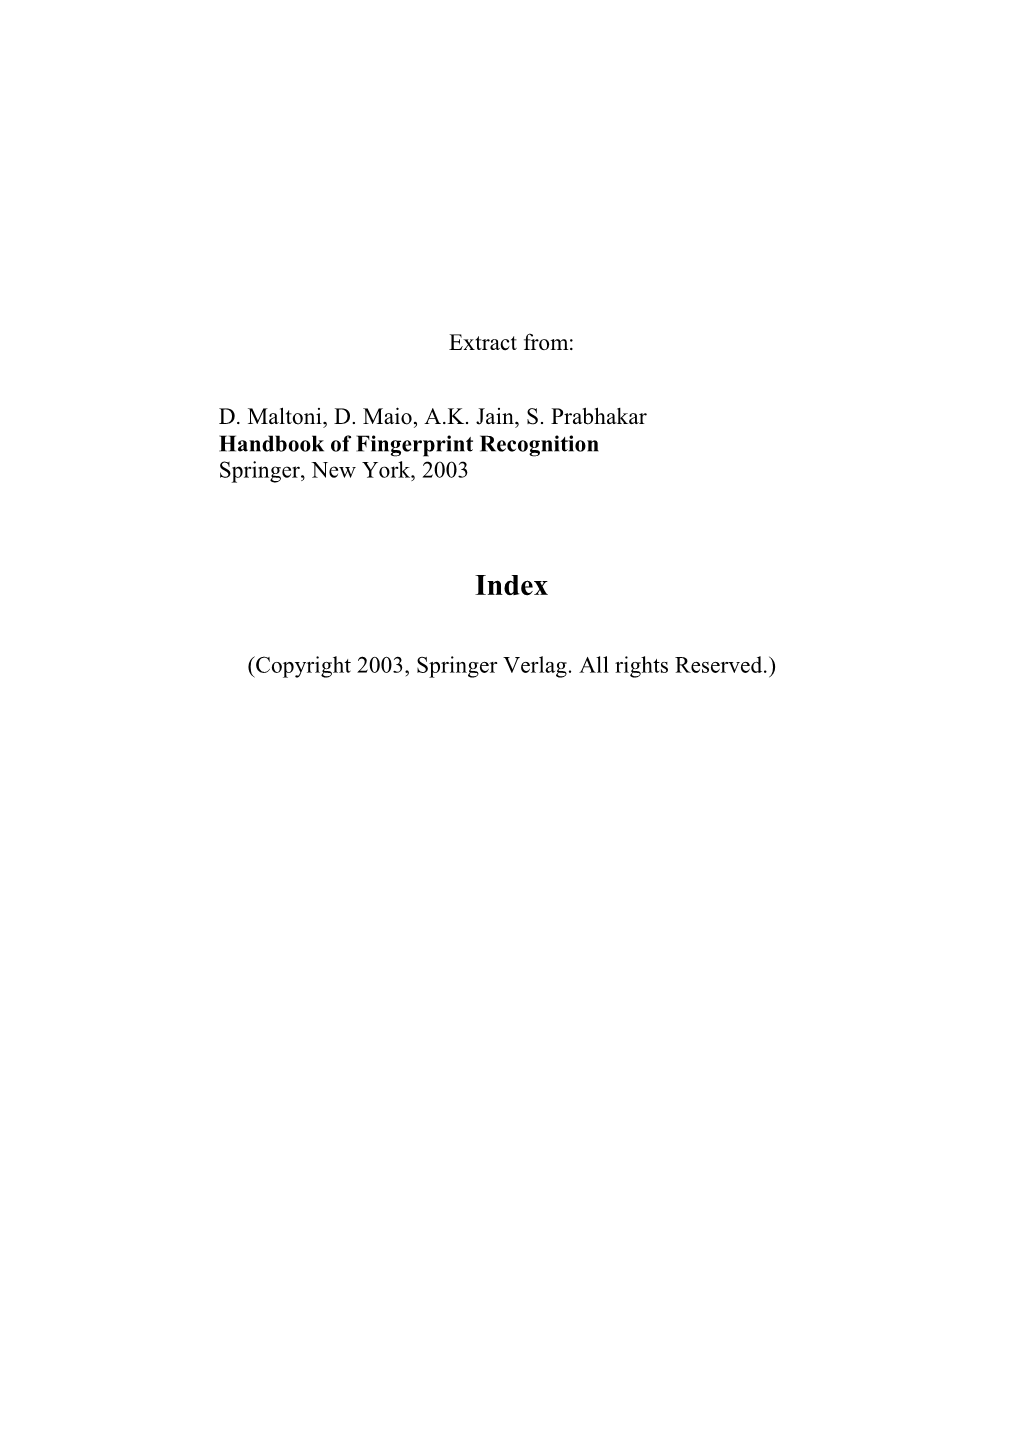 D. Maltoni, D. Maio, AK Jain, S. Prabhakar Handbook of Fingerprint